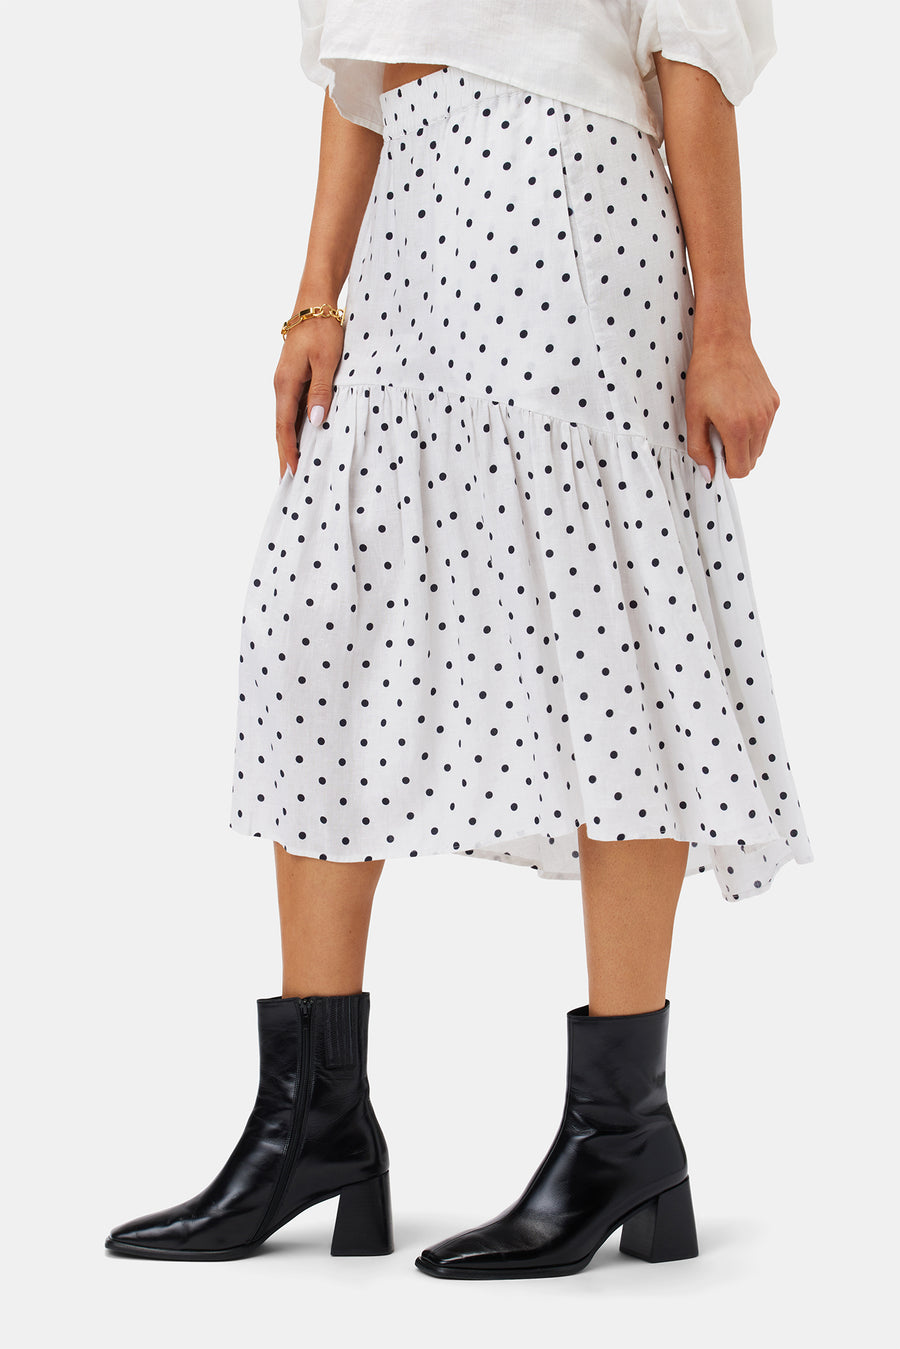 Lilly Pilly Lola Organic Linen Skirt - Polka Dots